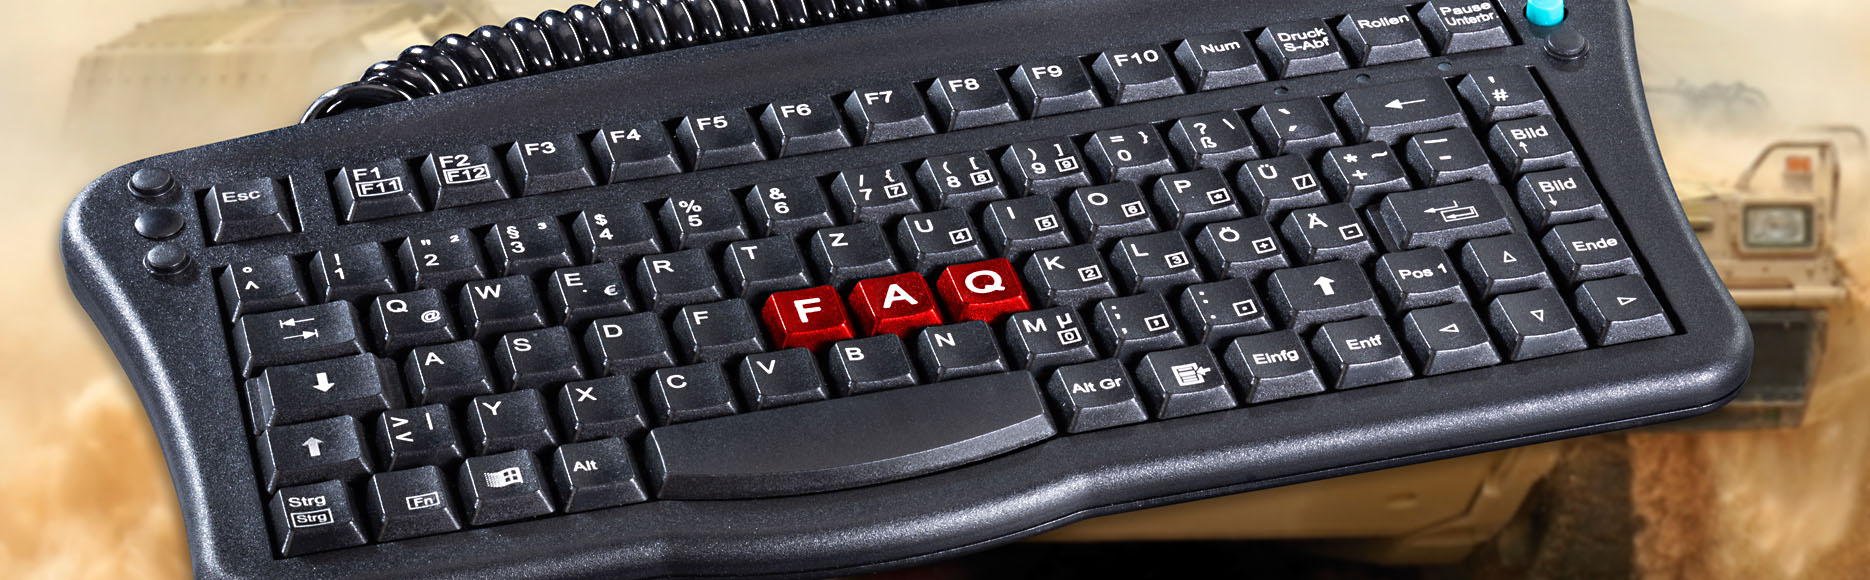 FAQ on the raised keys of a keyboard